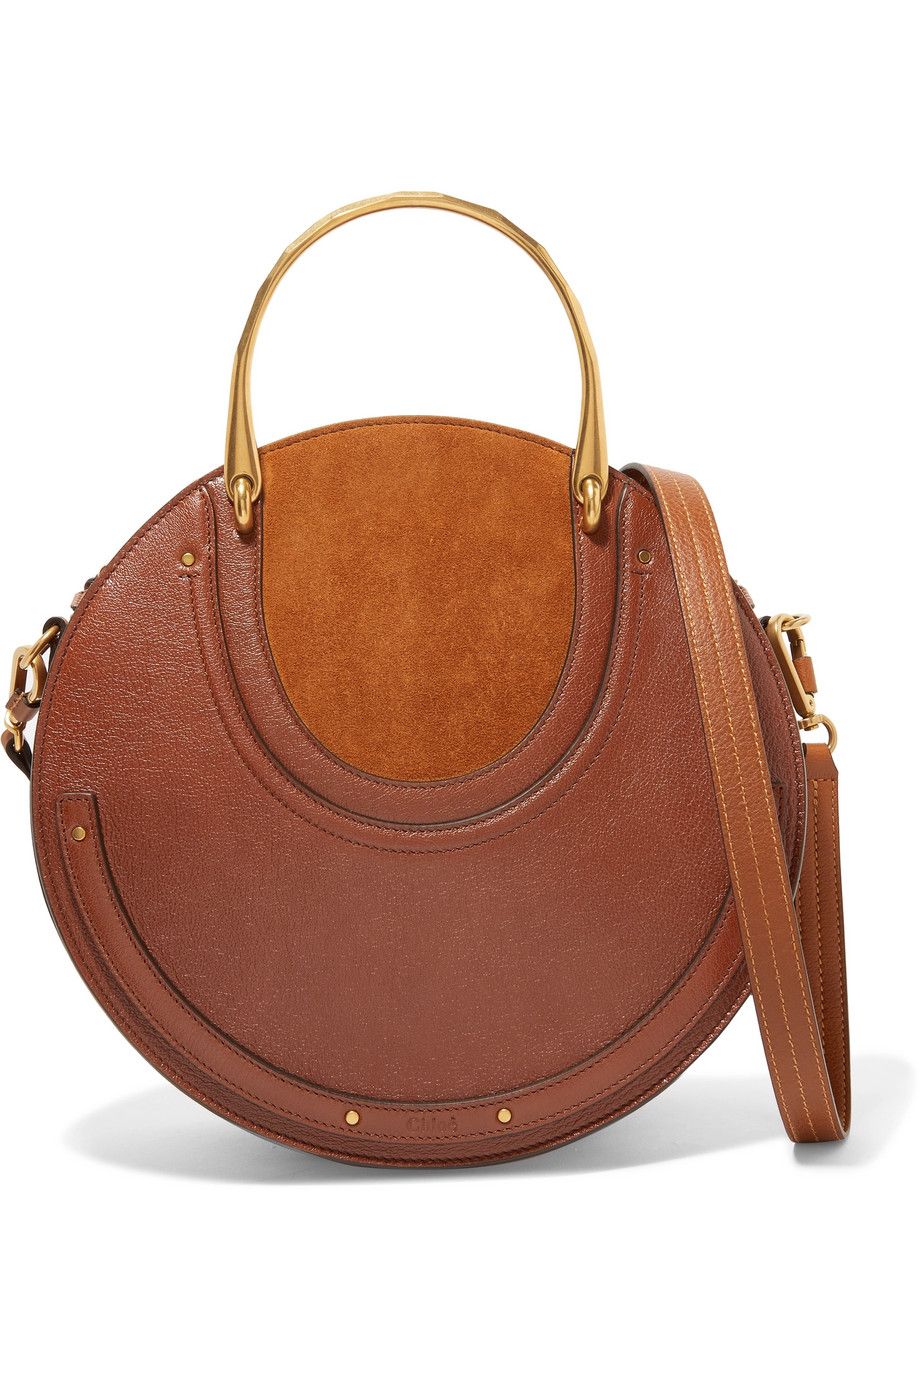 Handbag, Bag, Leather, Tan, Brown, Fashion accessory, Shoulder bag, Beige, Strap, Luggage and bags, 